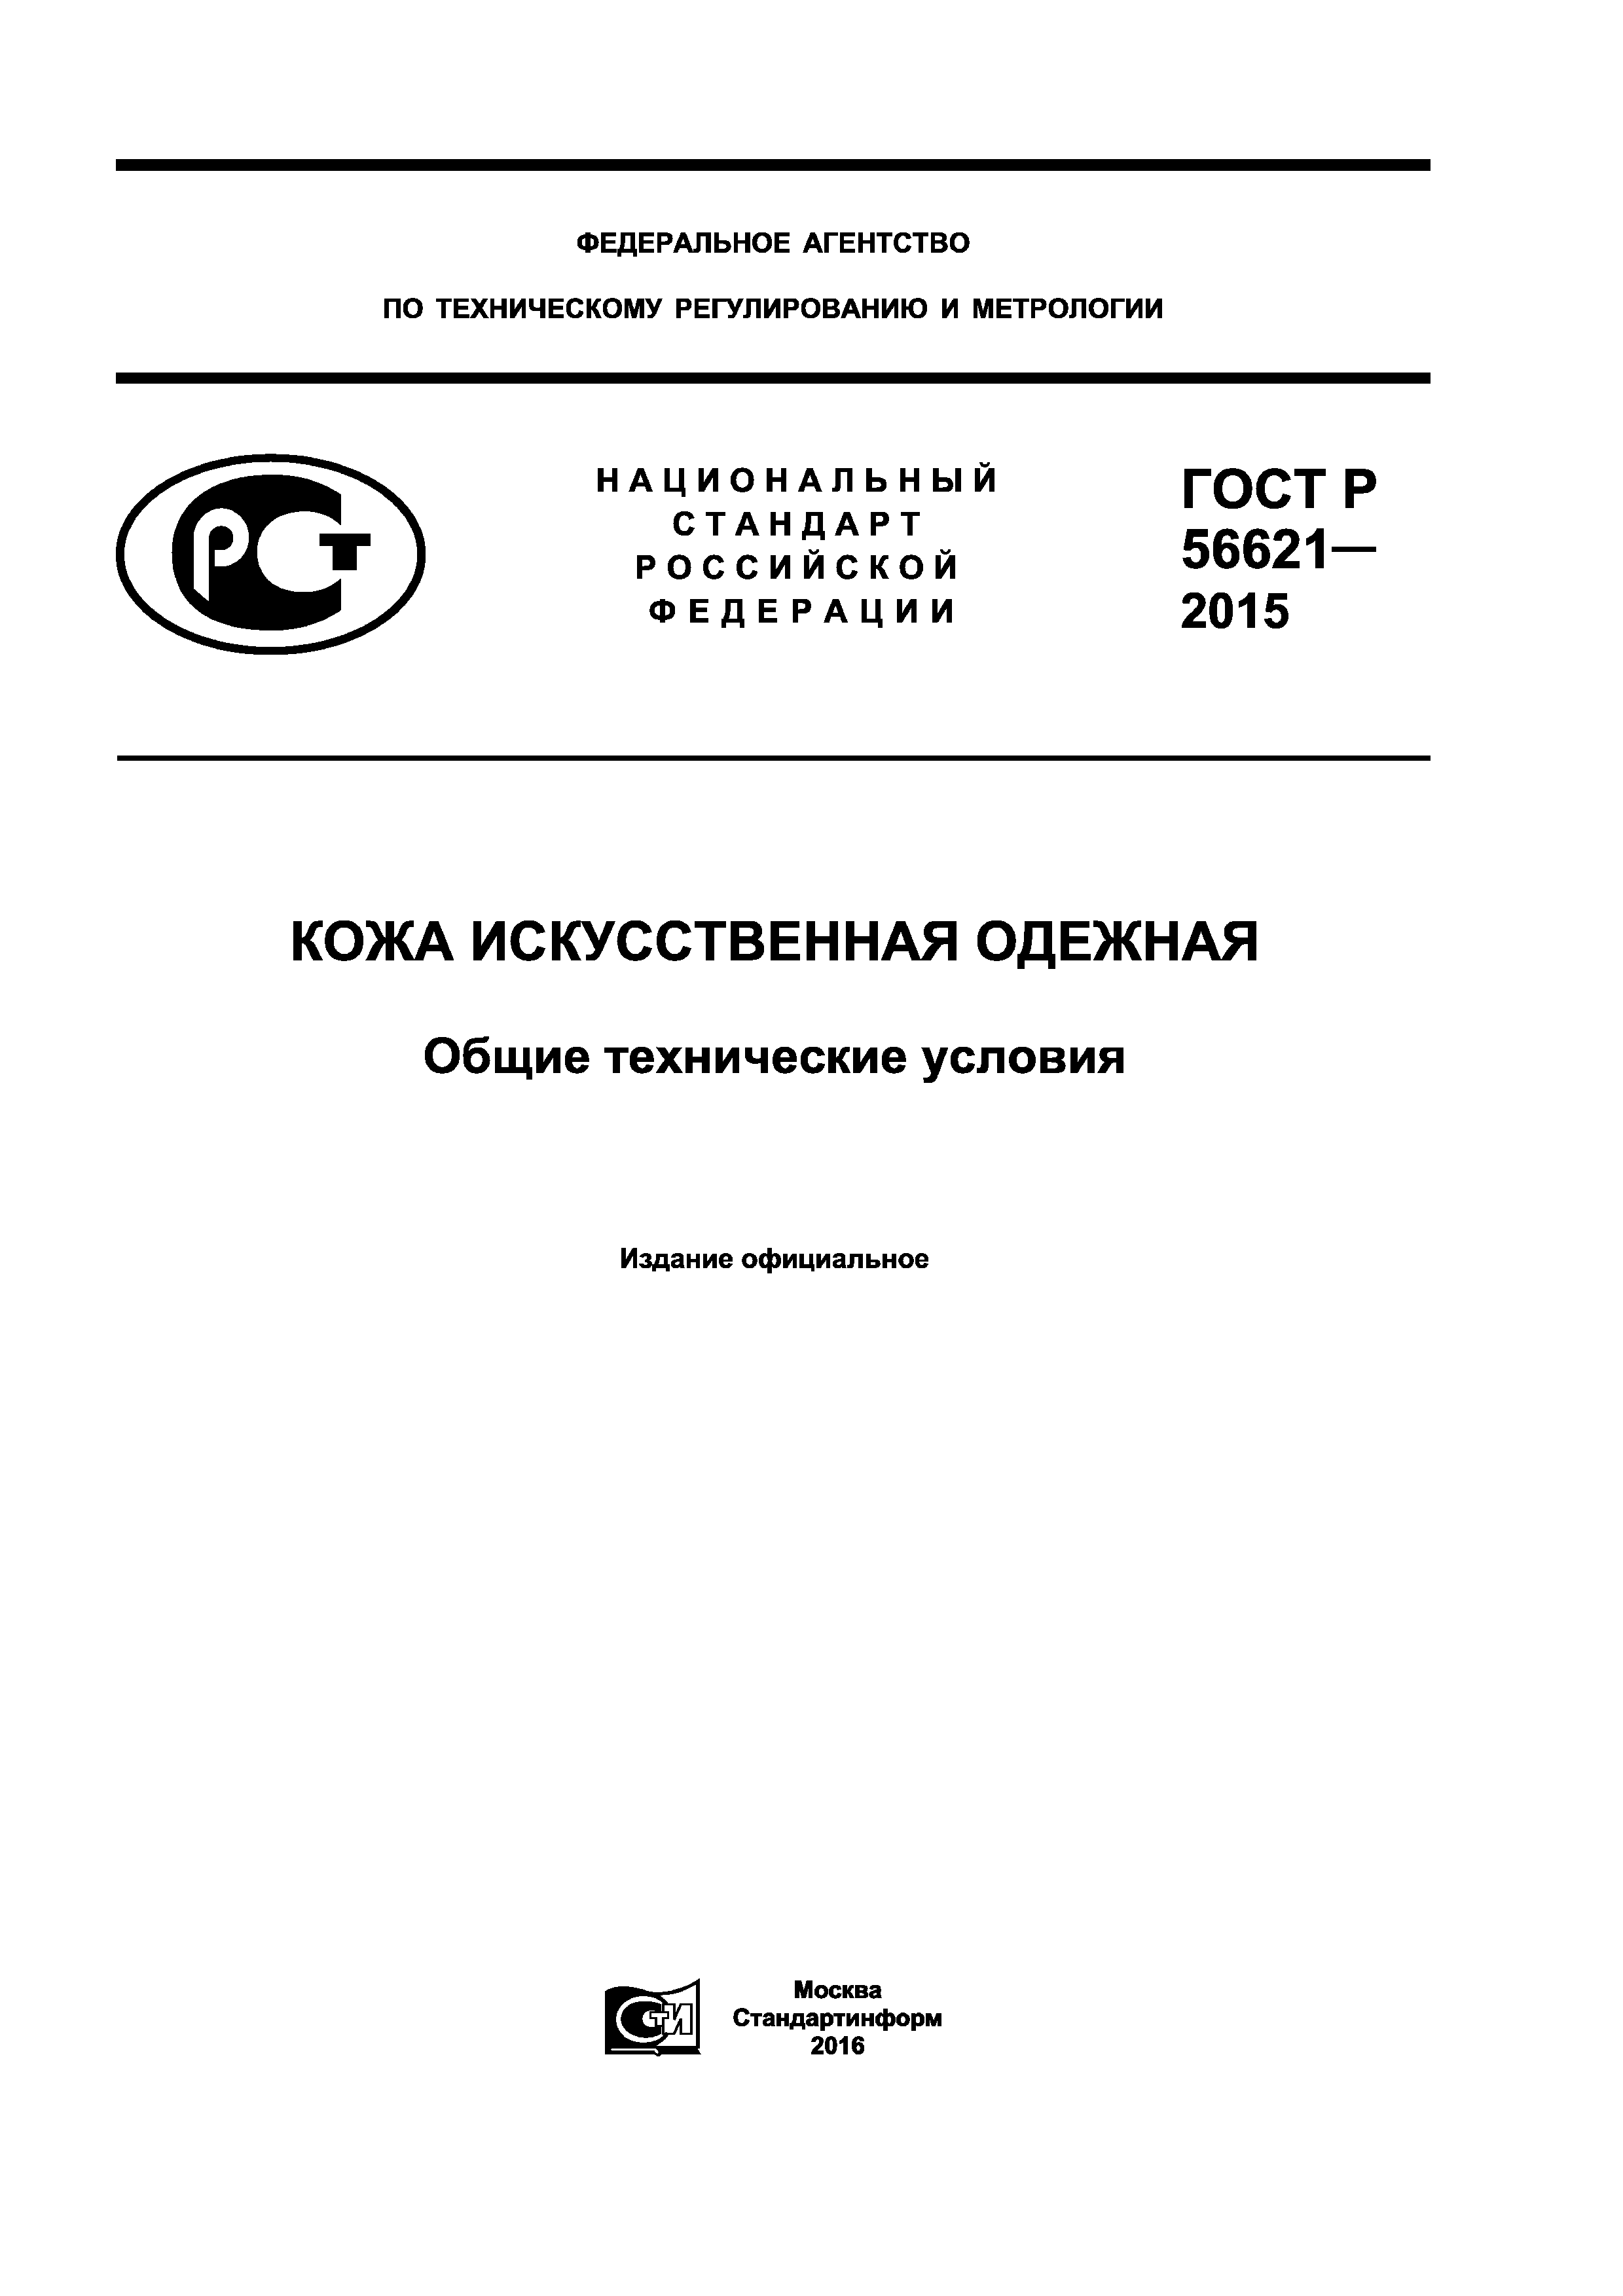 ГОСТ Р 56621-2015